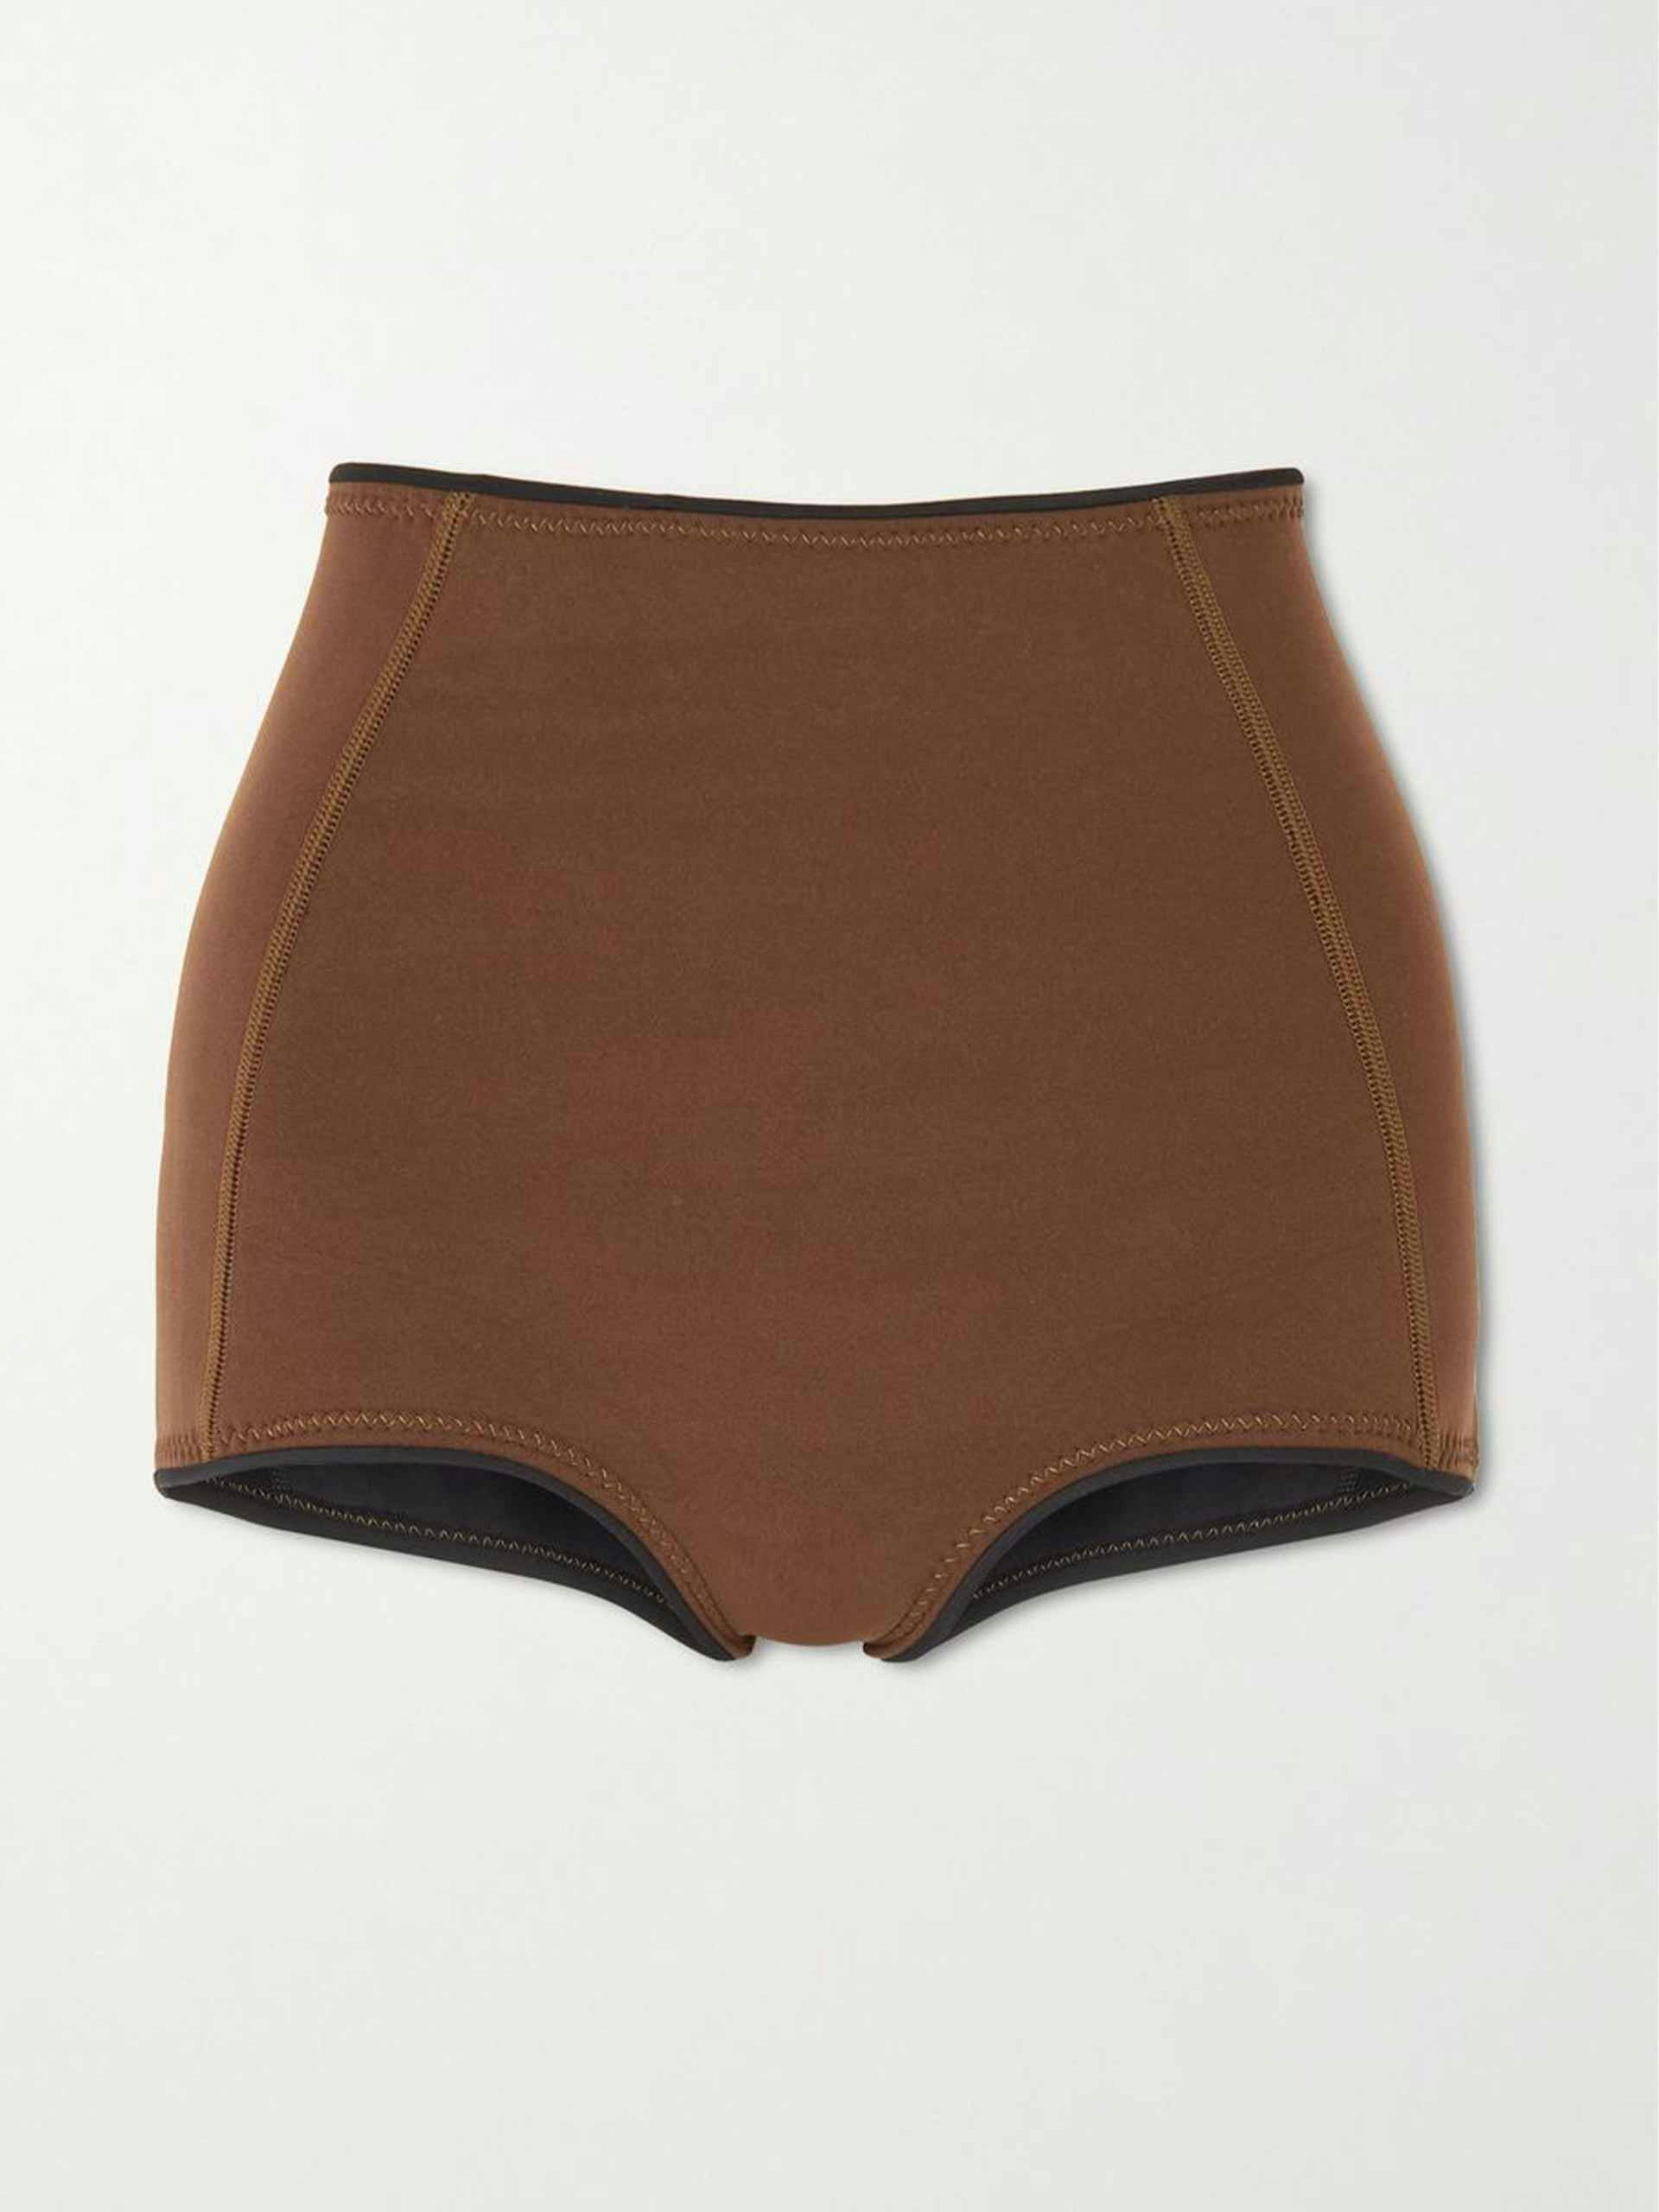 Brown neoprene bikini briefs